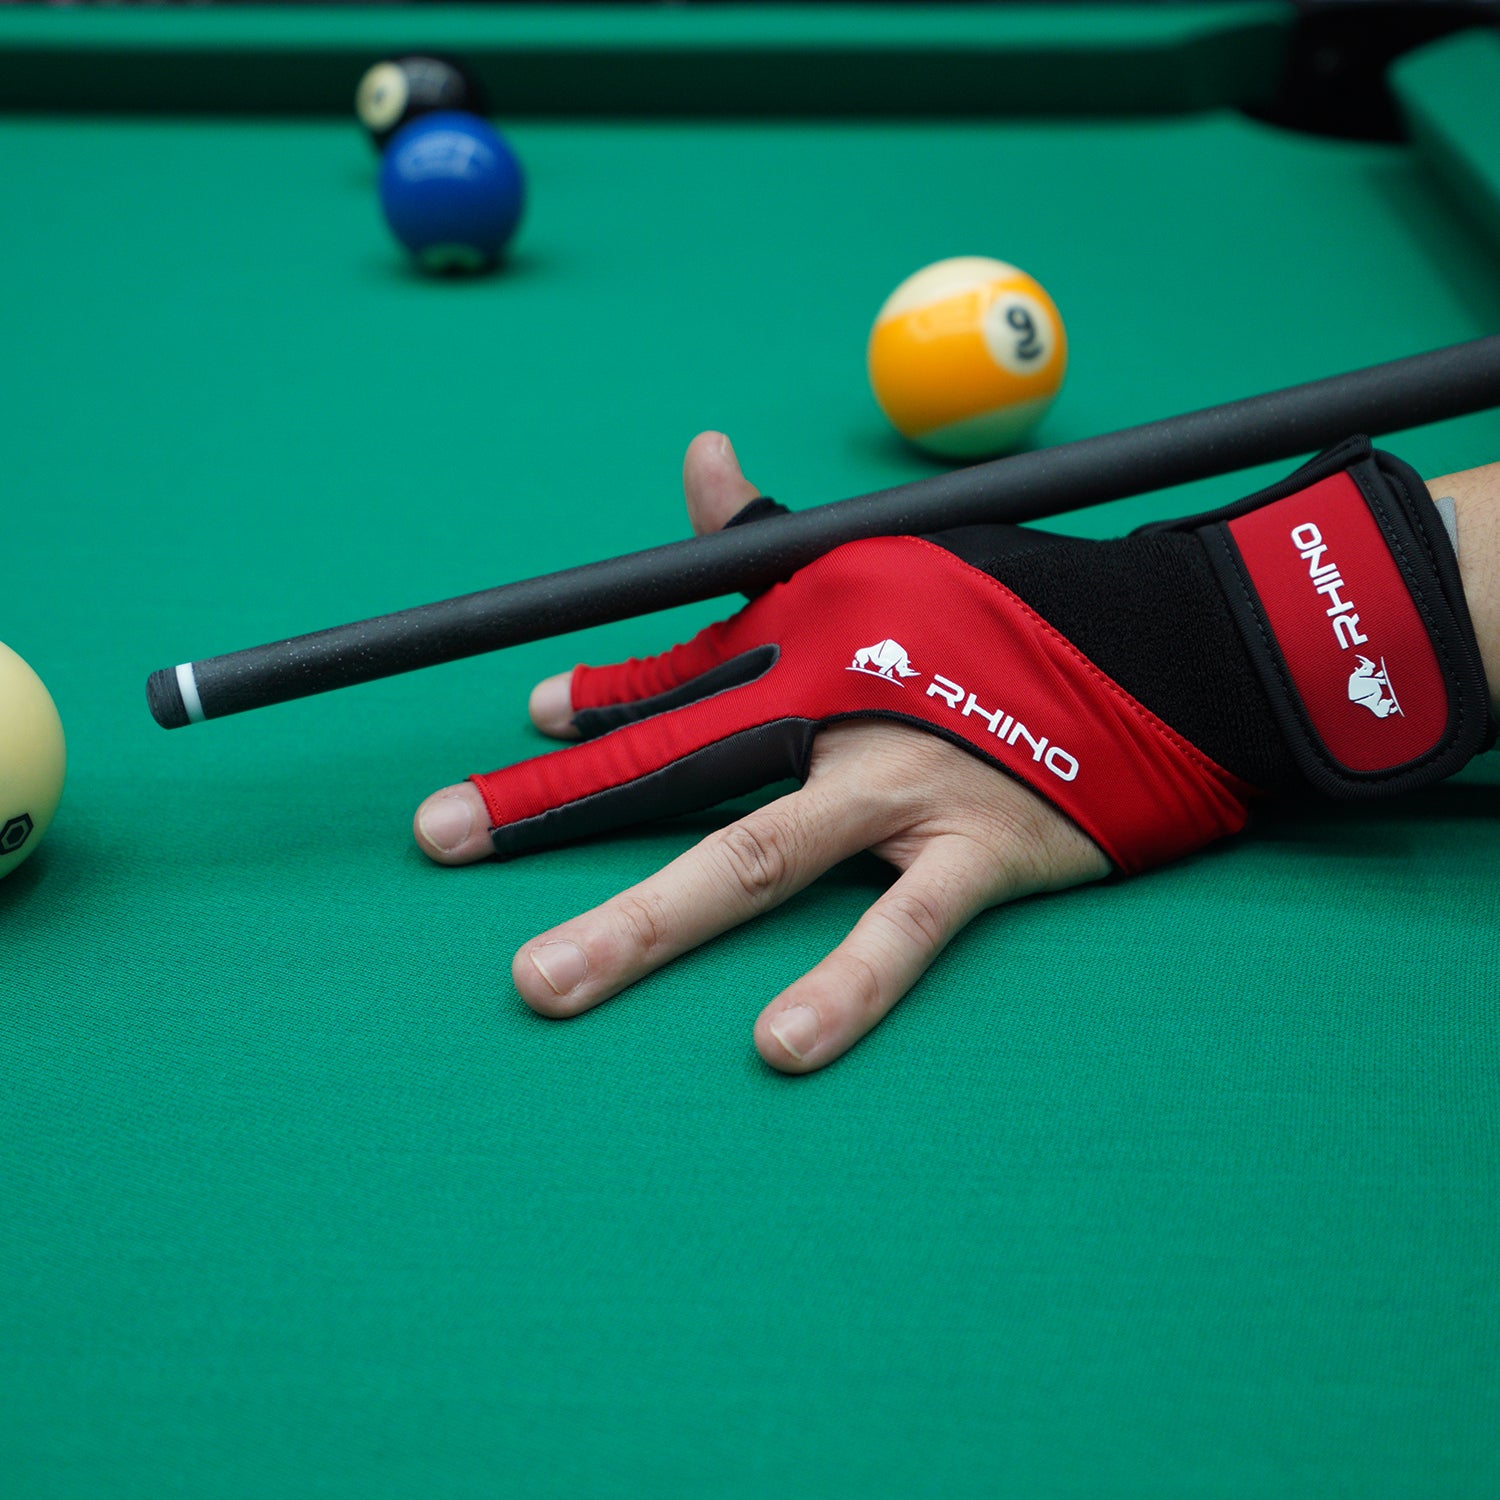 RHINO Billiards Glove Left Hand - Red